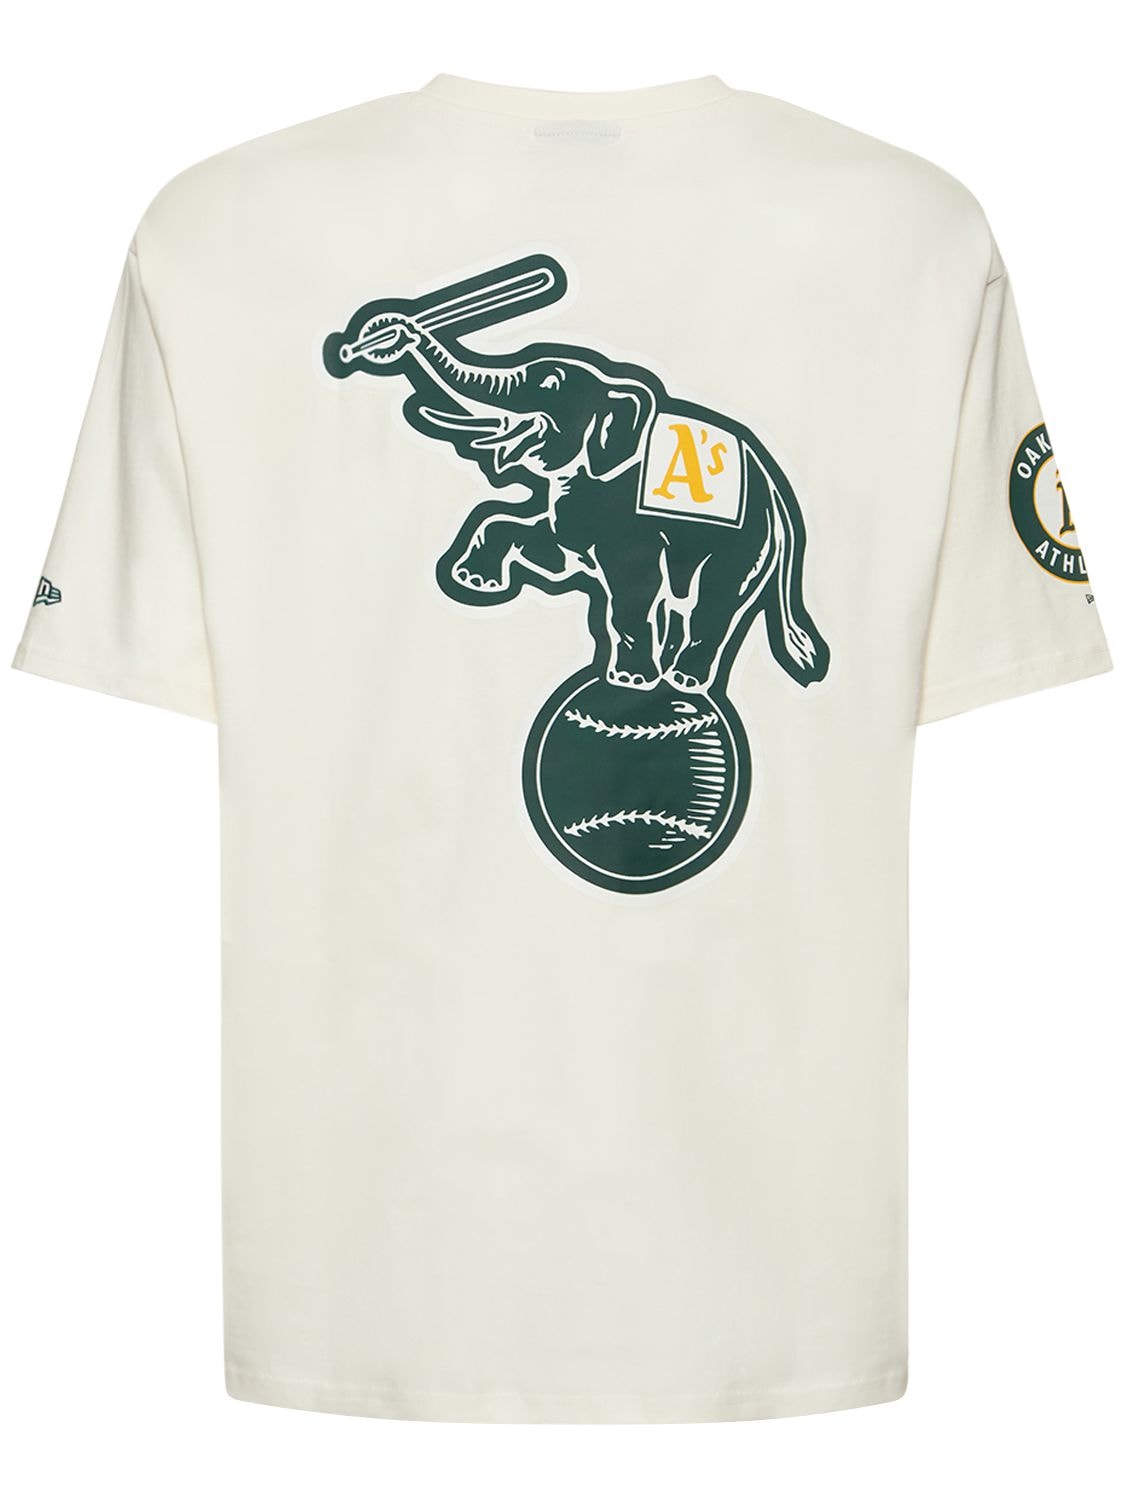 Los Angeles Dodgers New Era MLB Heritage Graphic T-Shirt